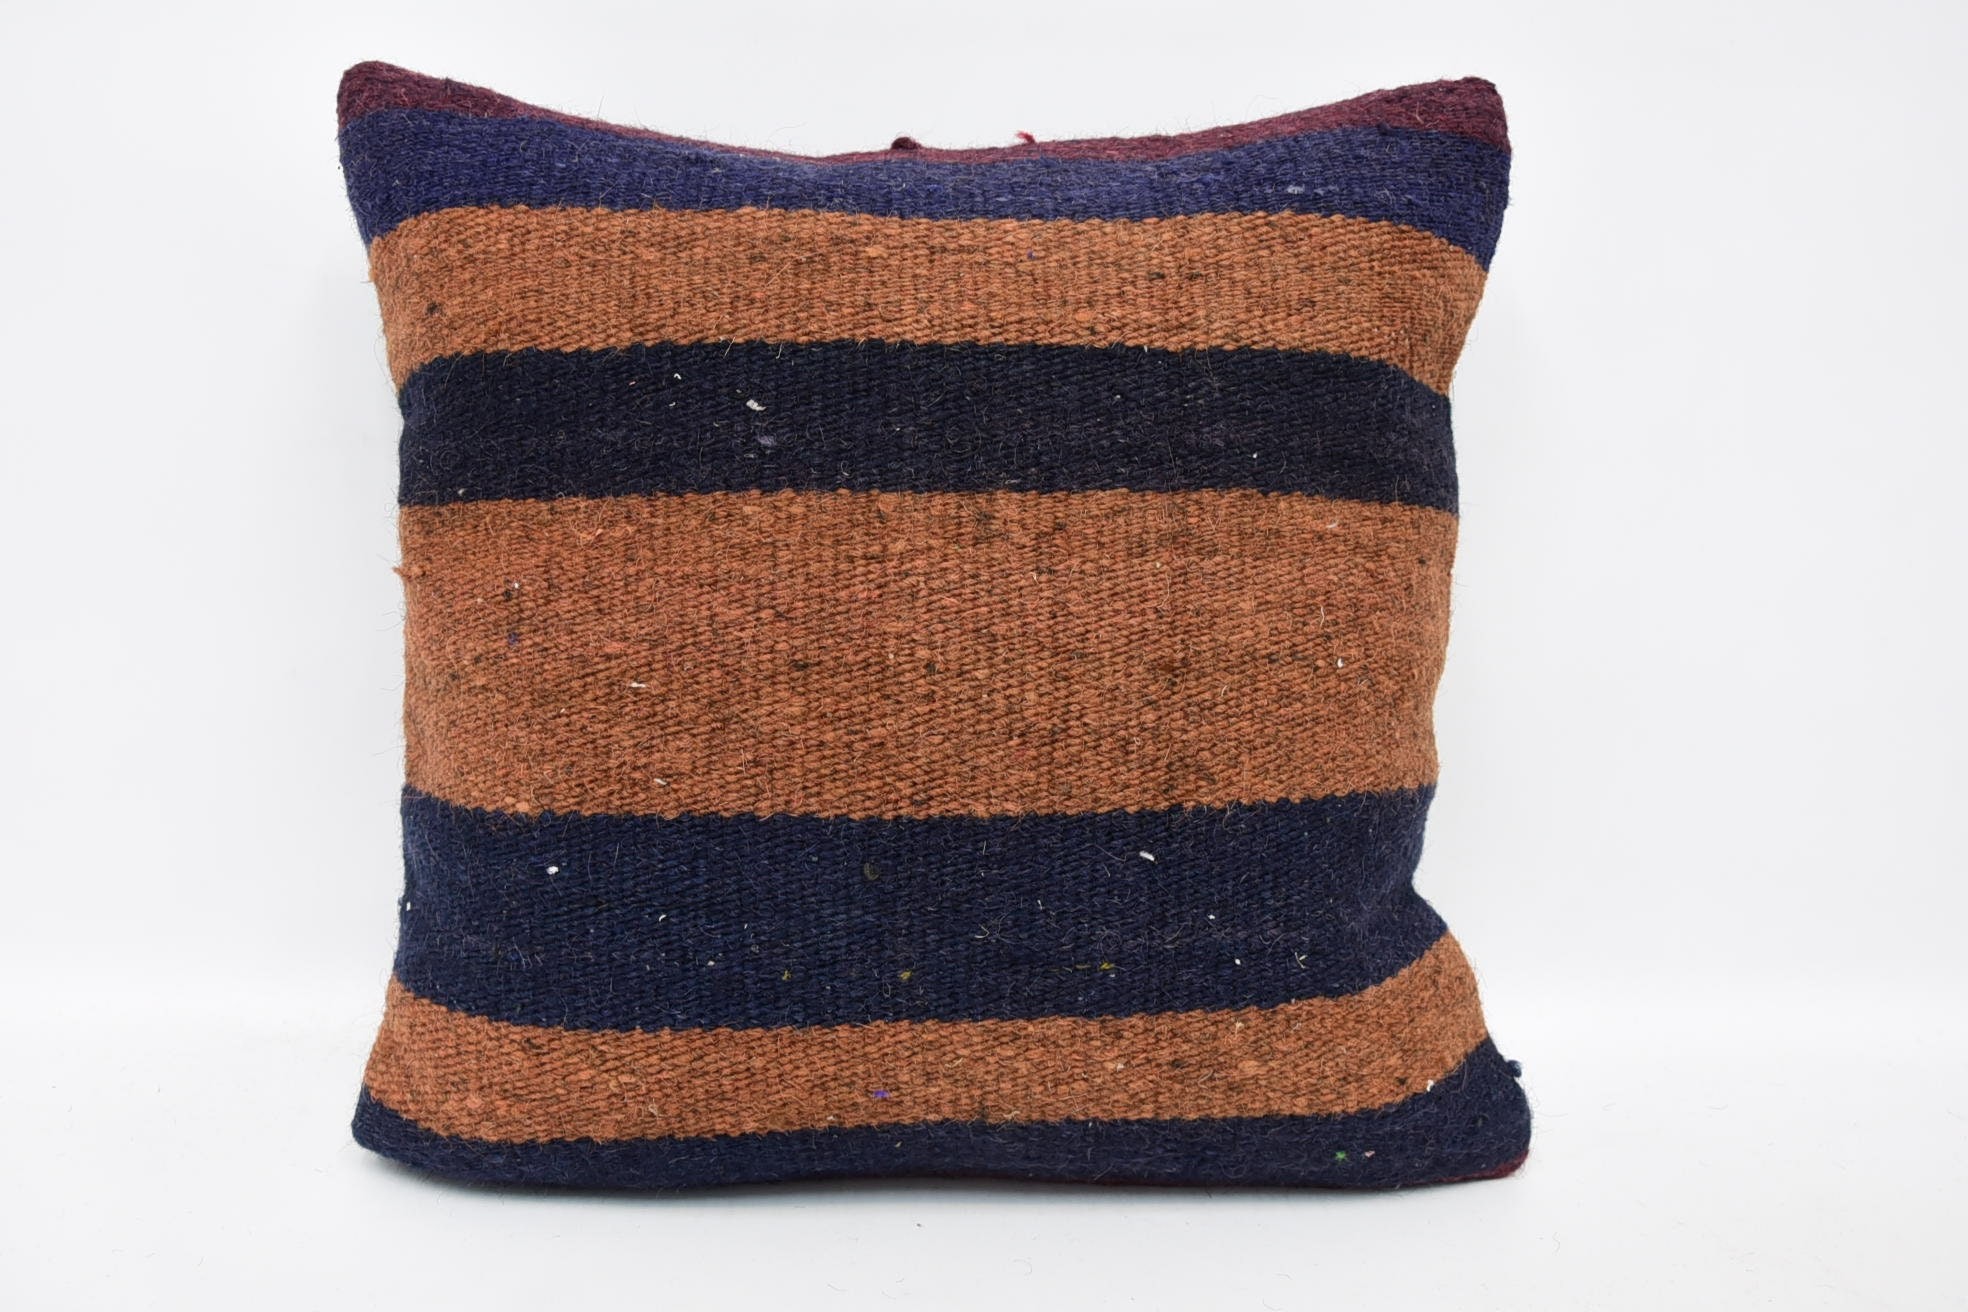 Antique Pillows, Boho Pillow, Decorative Cushion Cover, 18"x18" Blue Pillow Cover, Vintage Kilim Throw Pillow